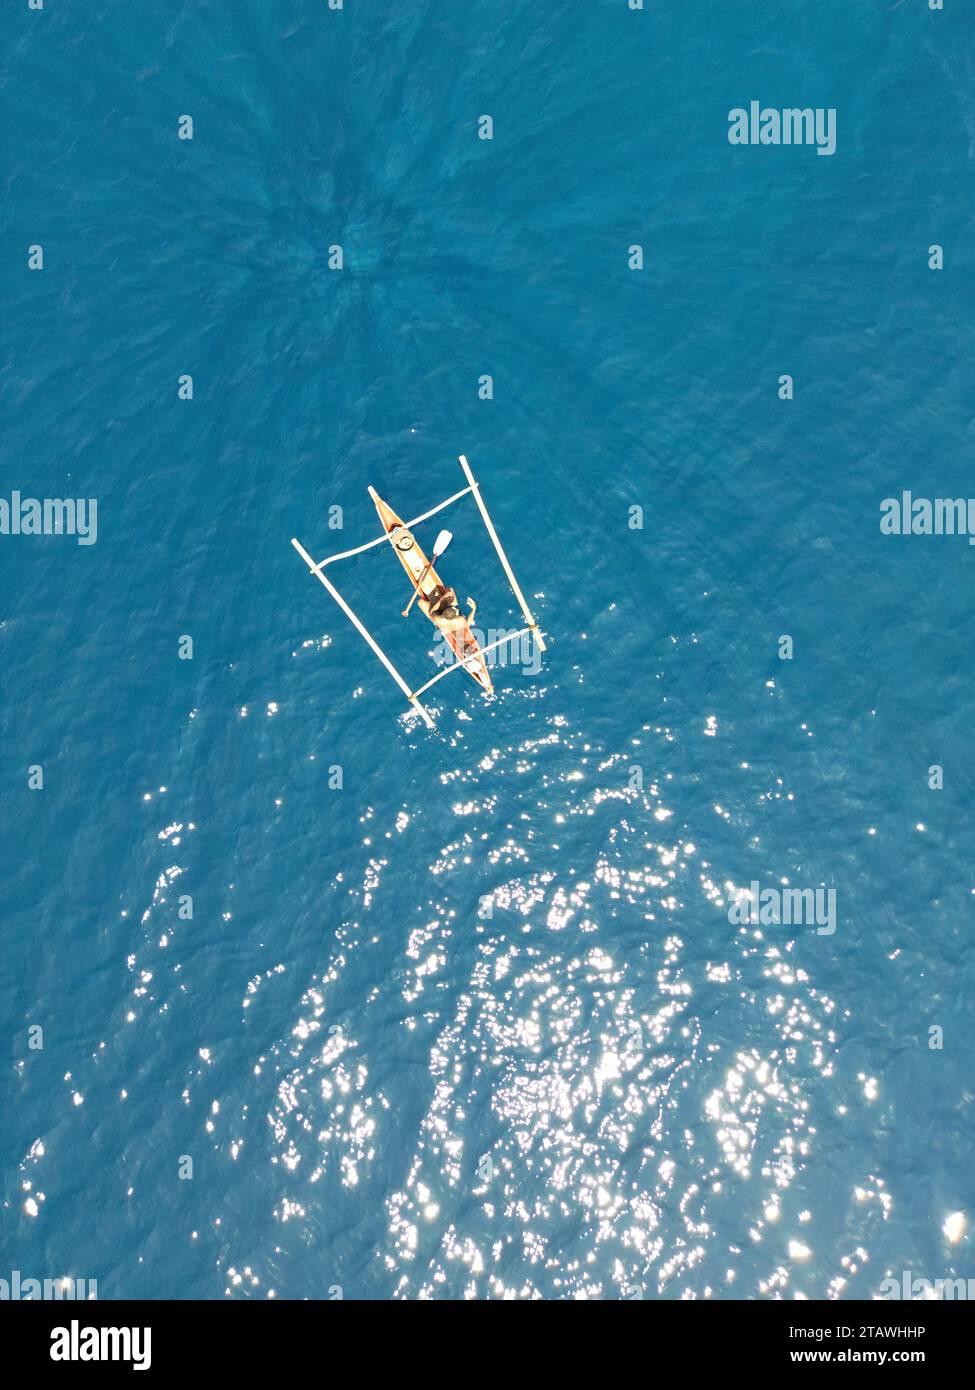 Indonésie Alor - Drone View Pura Island Mer nomades - Bajau - pêche Banque D'Images